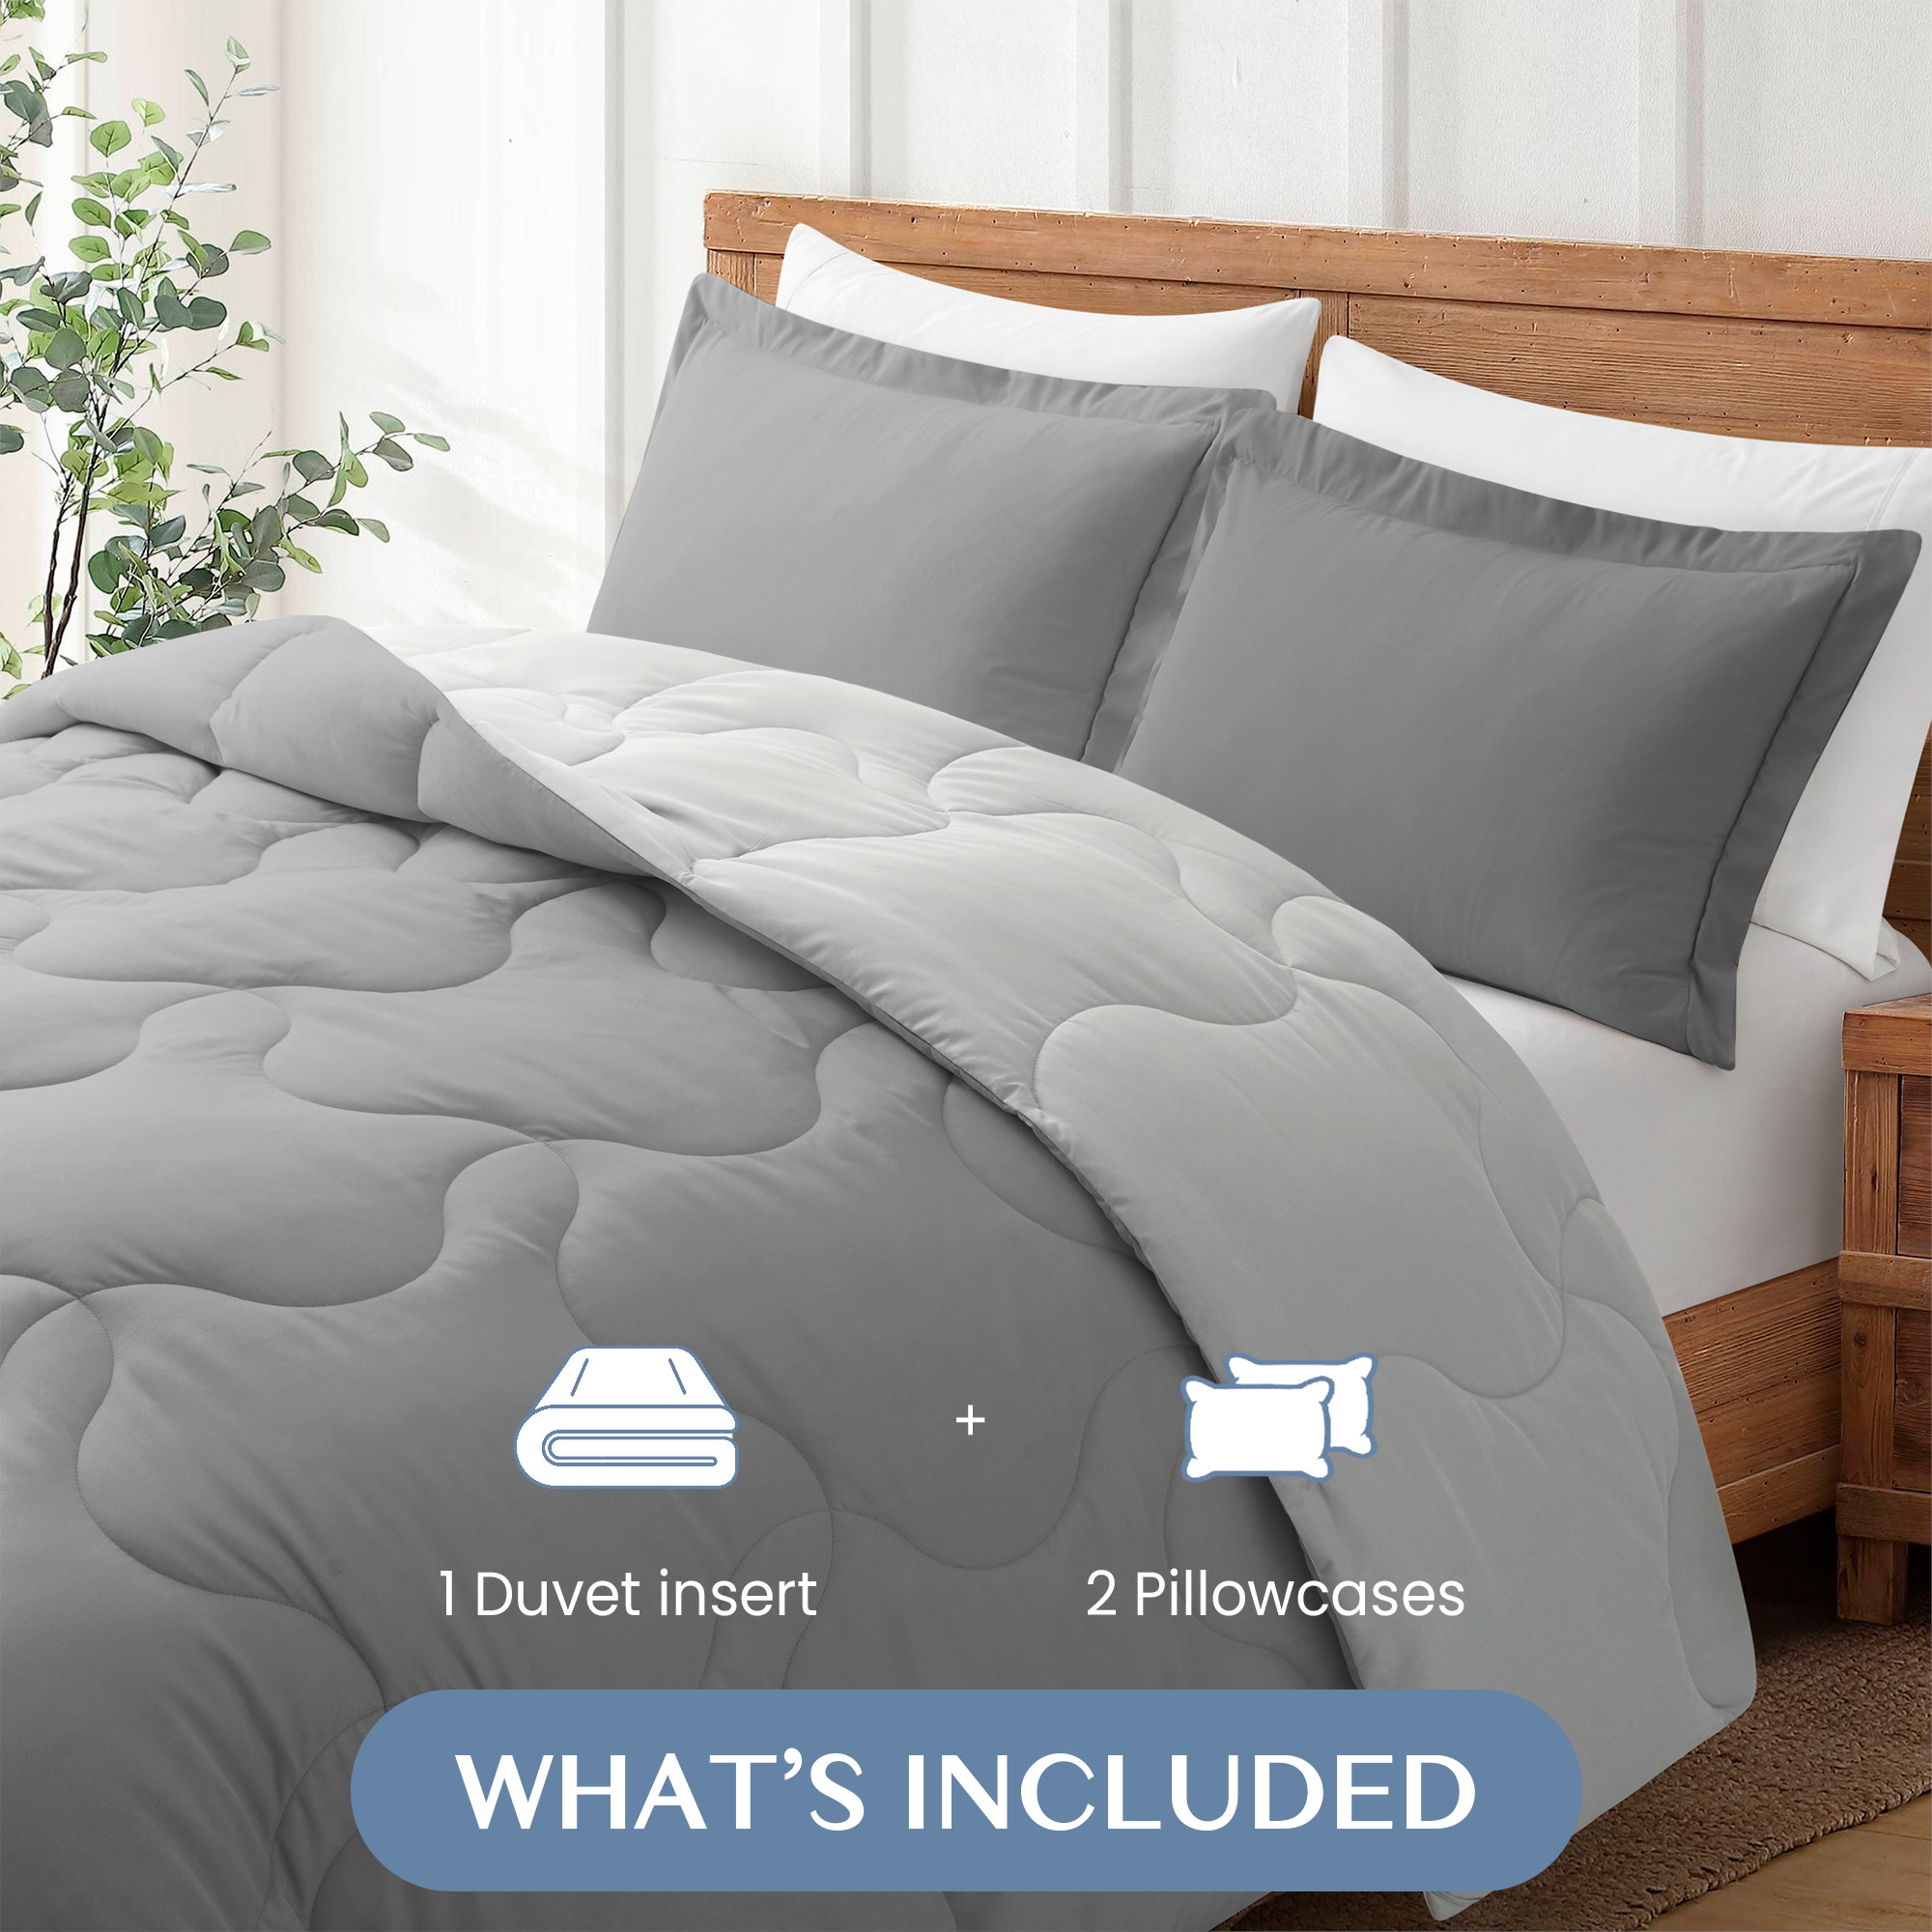 Lightweight Reversible Microfiber Down Alternative Comforter Set, Dark Gray&Light Gray, Full Queen